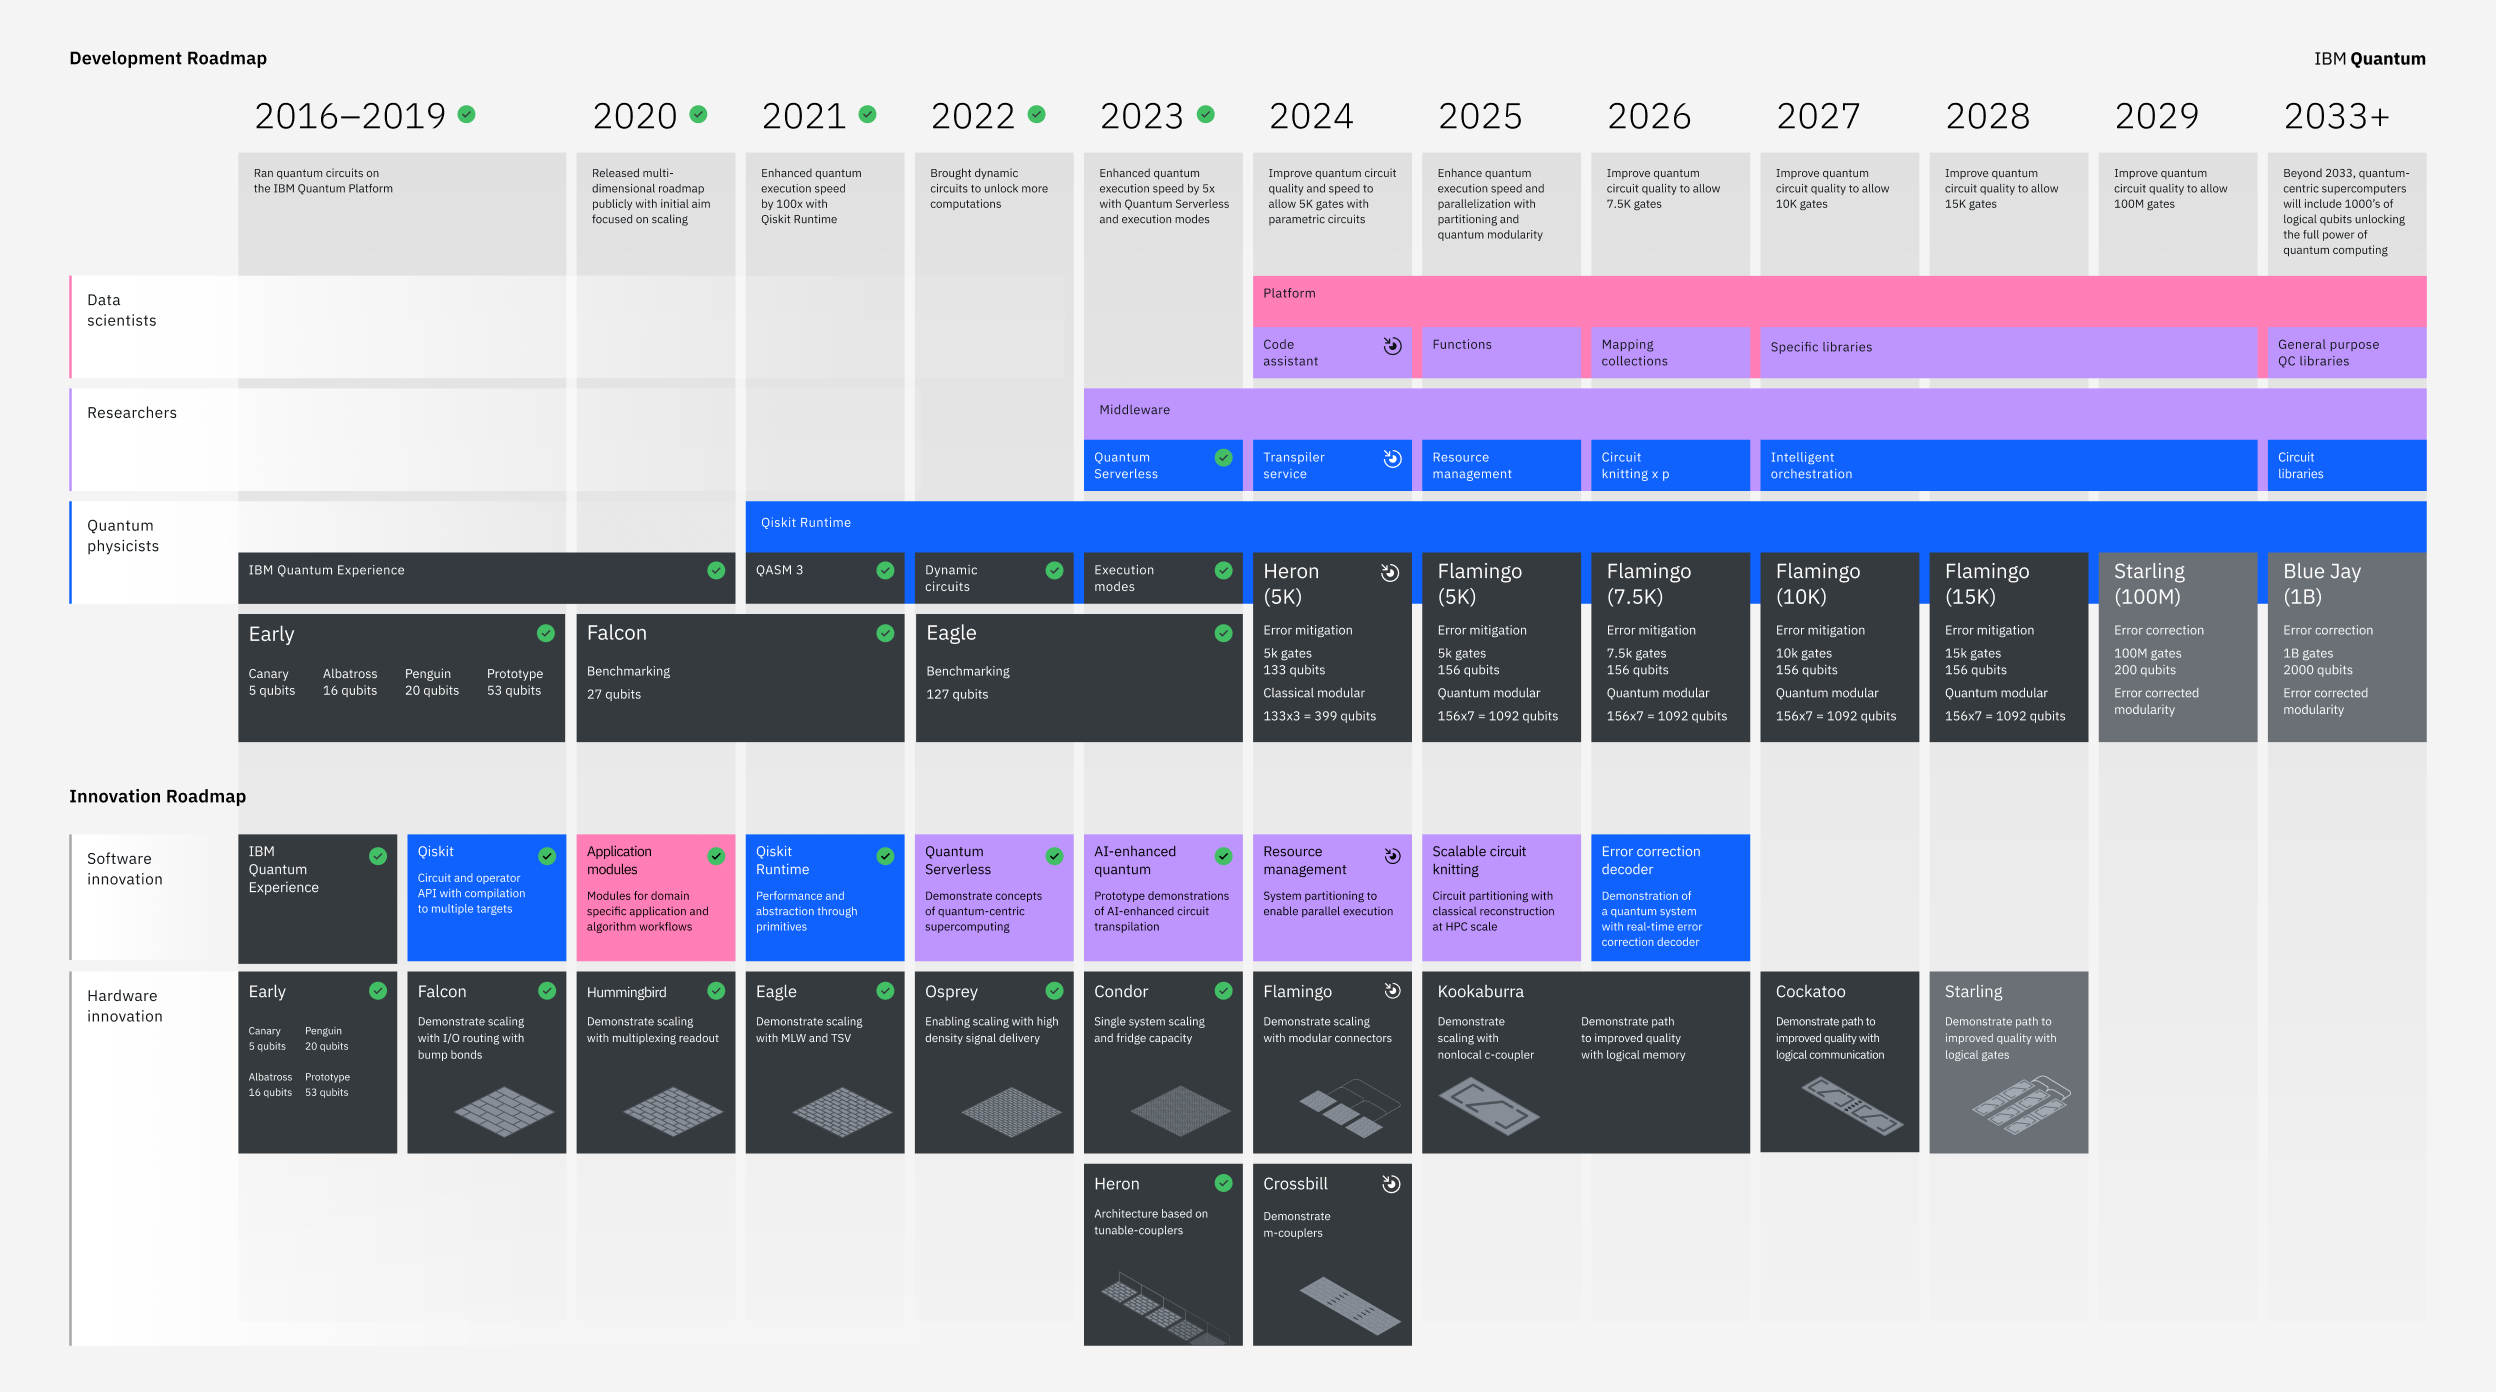 The IBM Quantum development roadmap from 2016 - 2033+